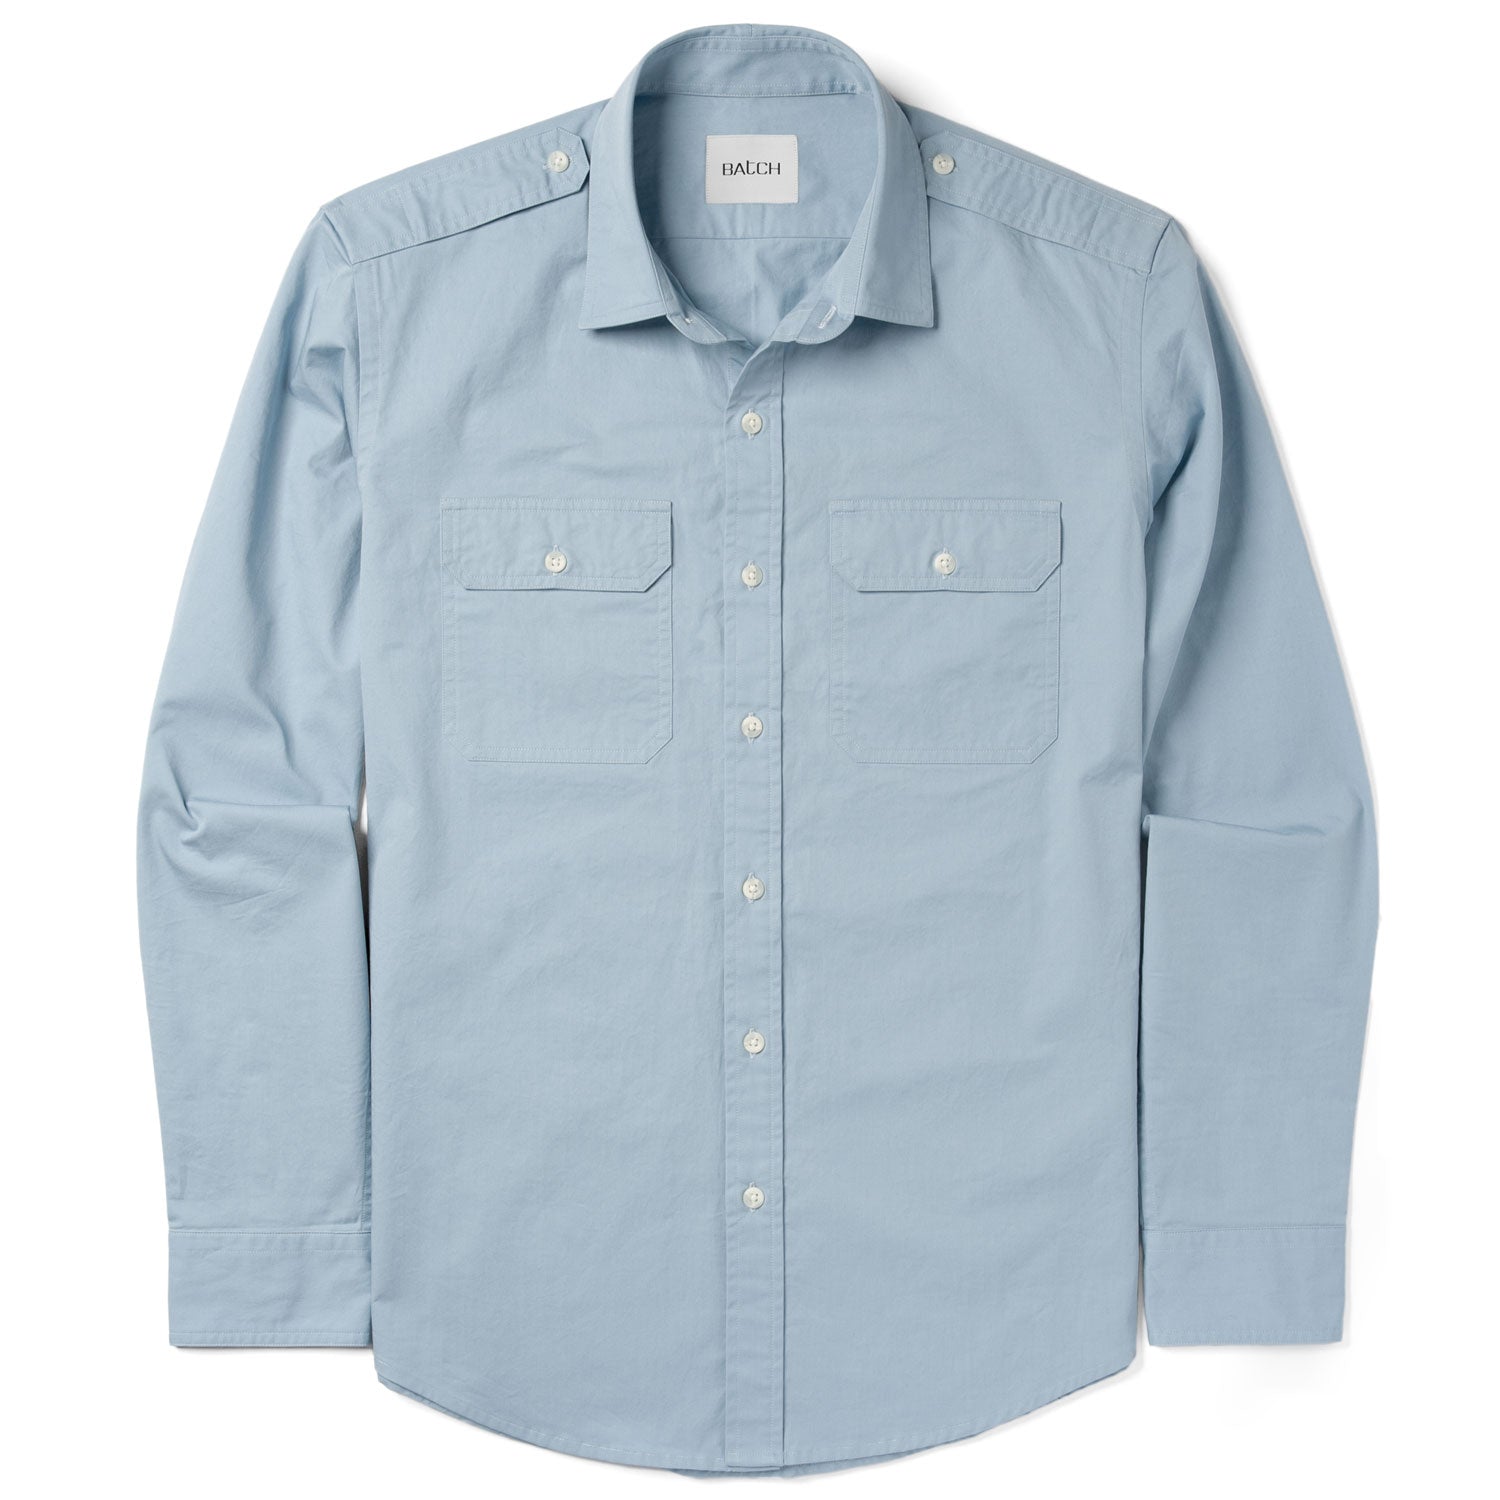 Smith Utility Shirt – Light Blue Cotton Twill